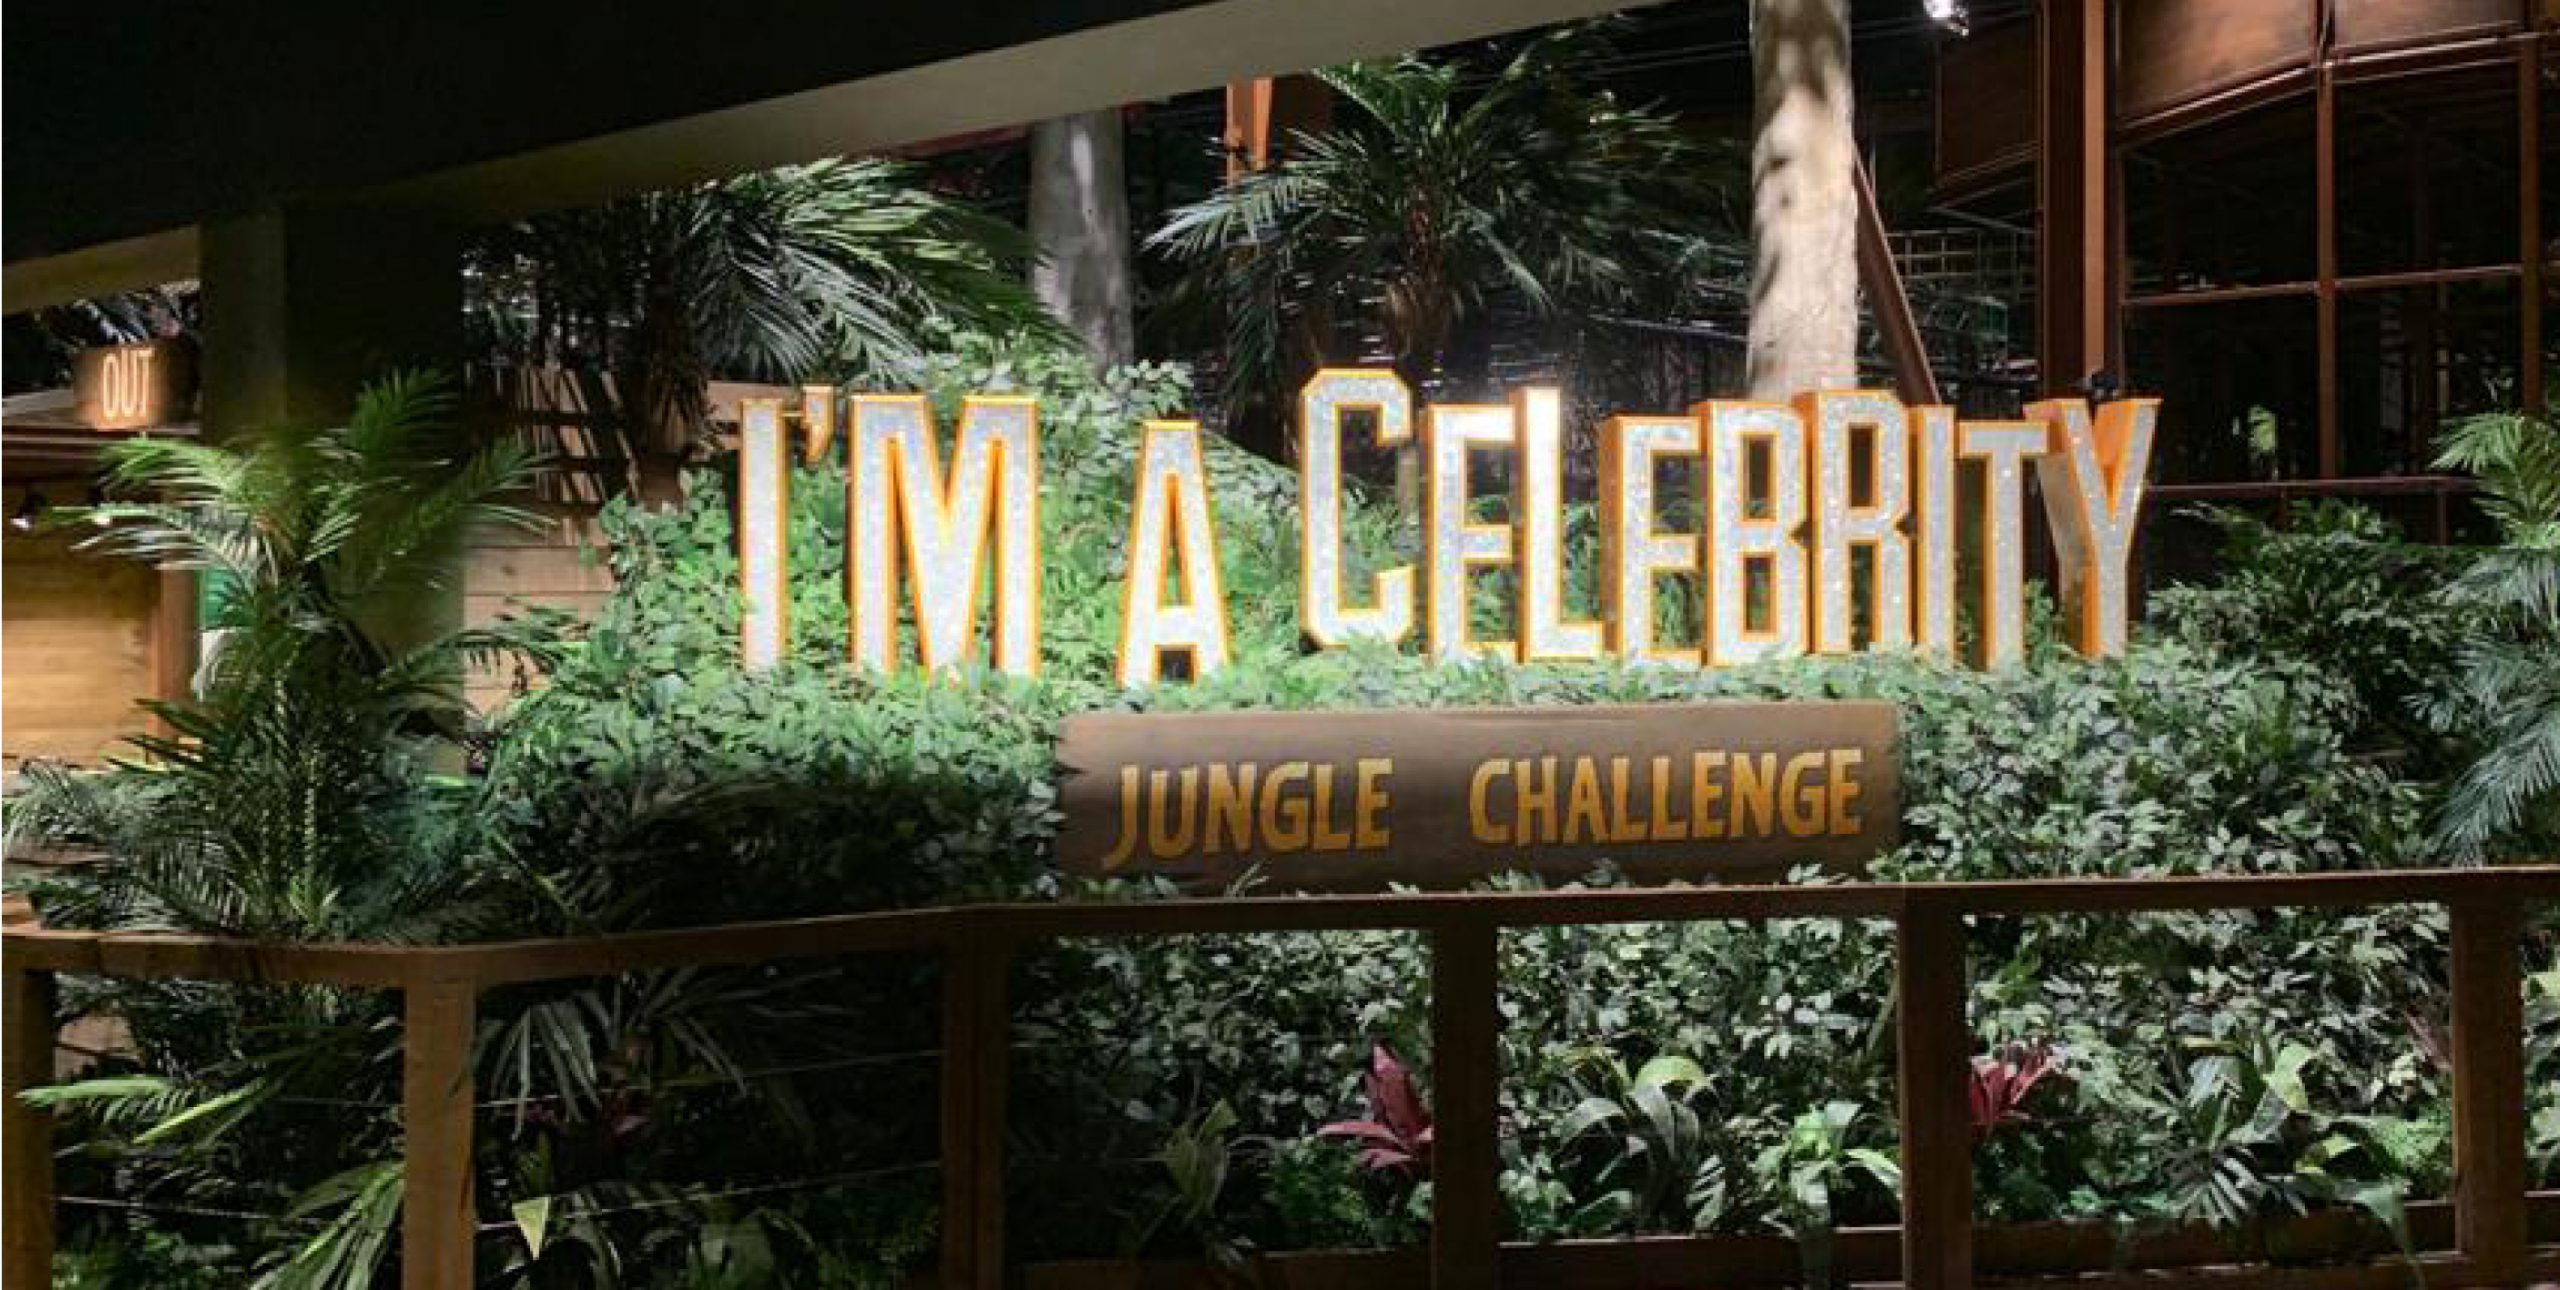 I'm a celebrity Jungle challenge entrance area